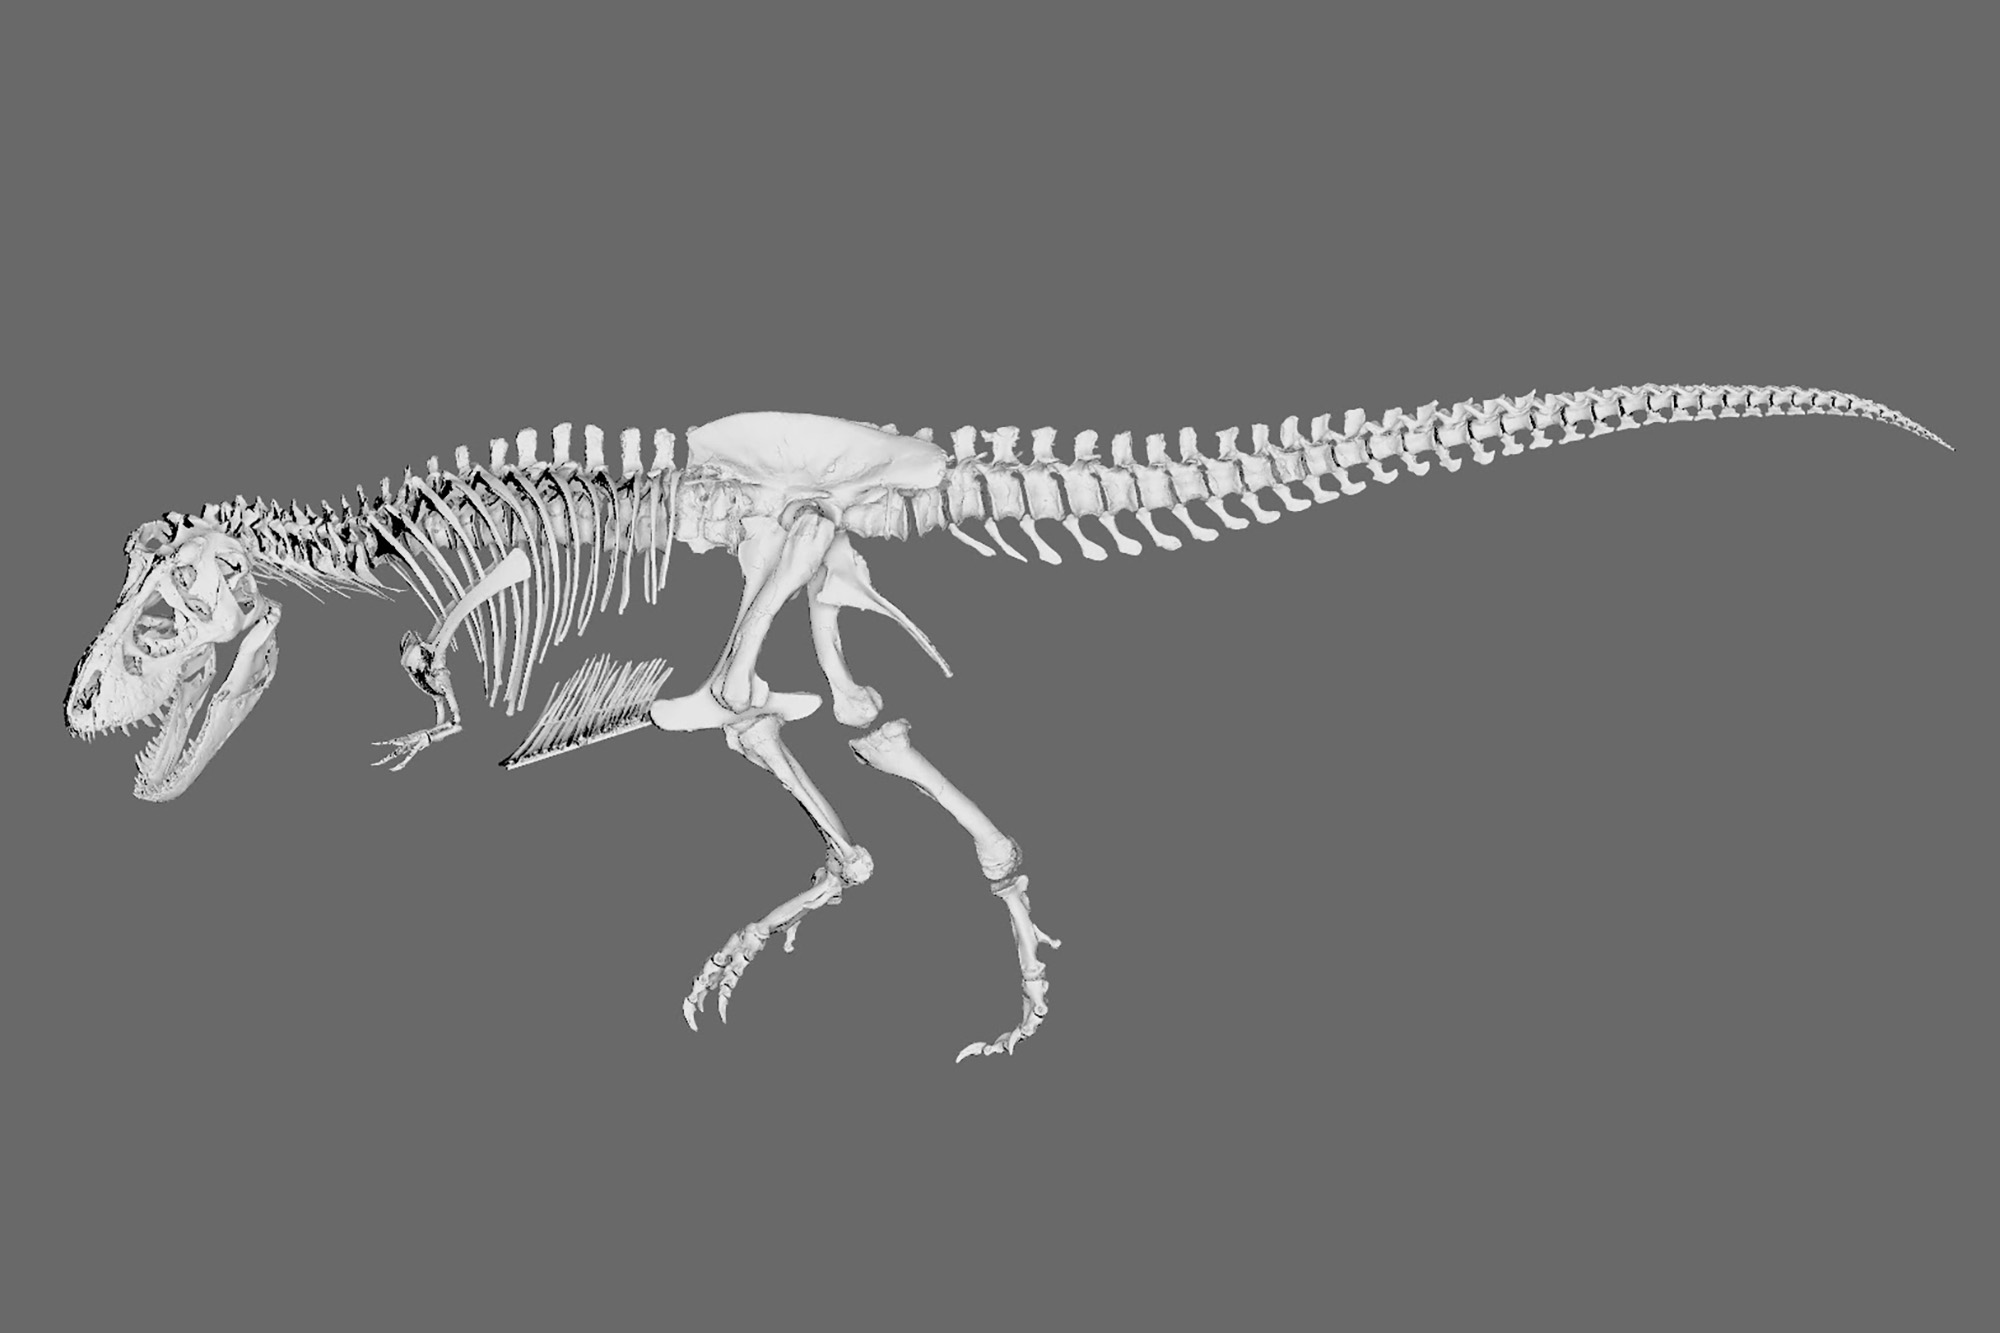 audition beruset solid 3D Printing a Full-Size Tyrannosaurus Rex Skeleton | Digital Trends